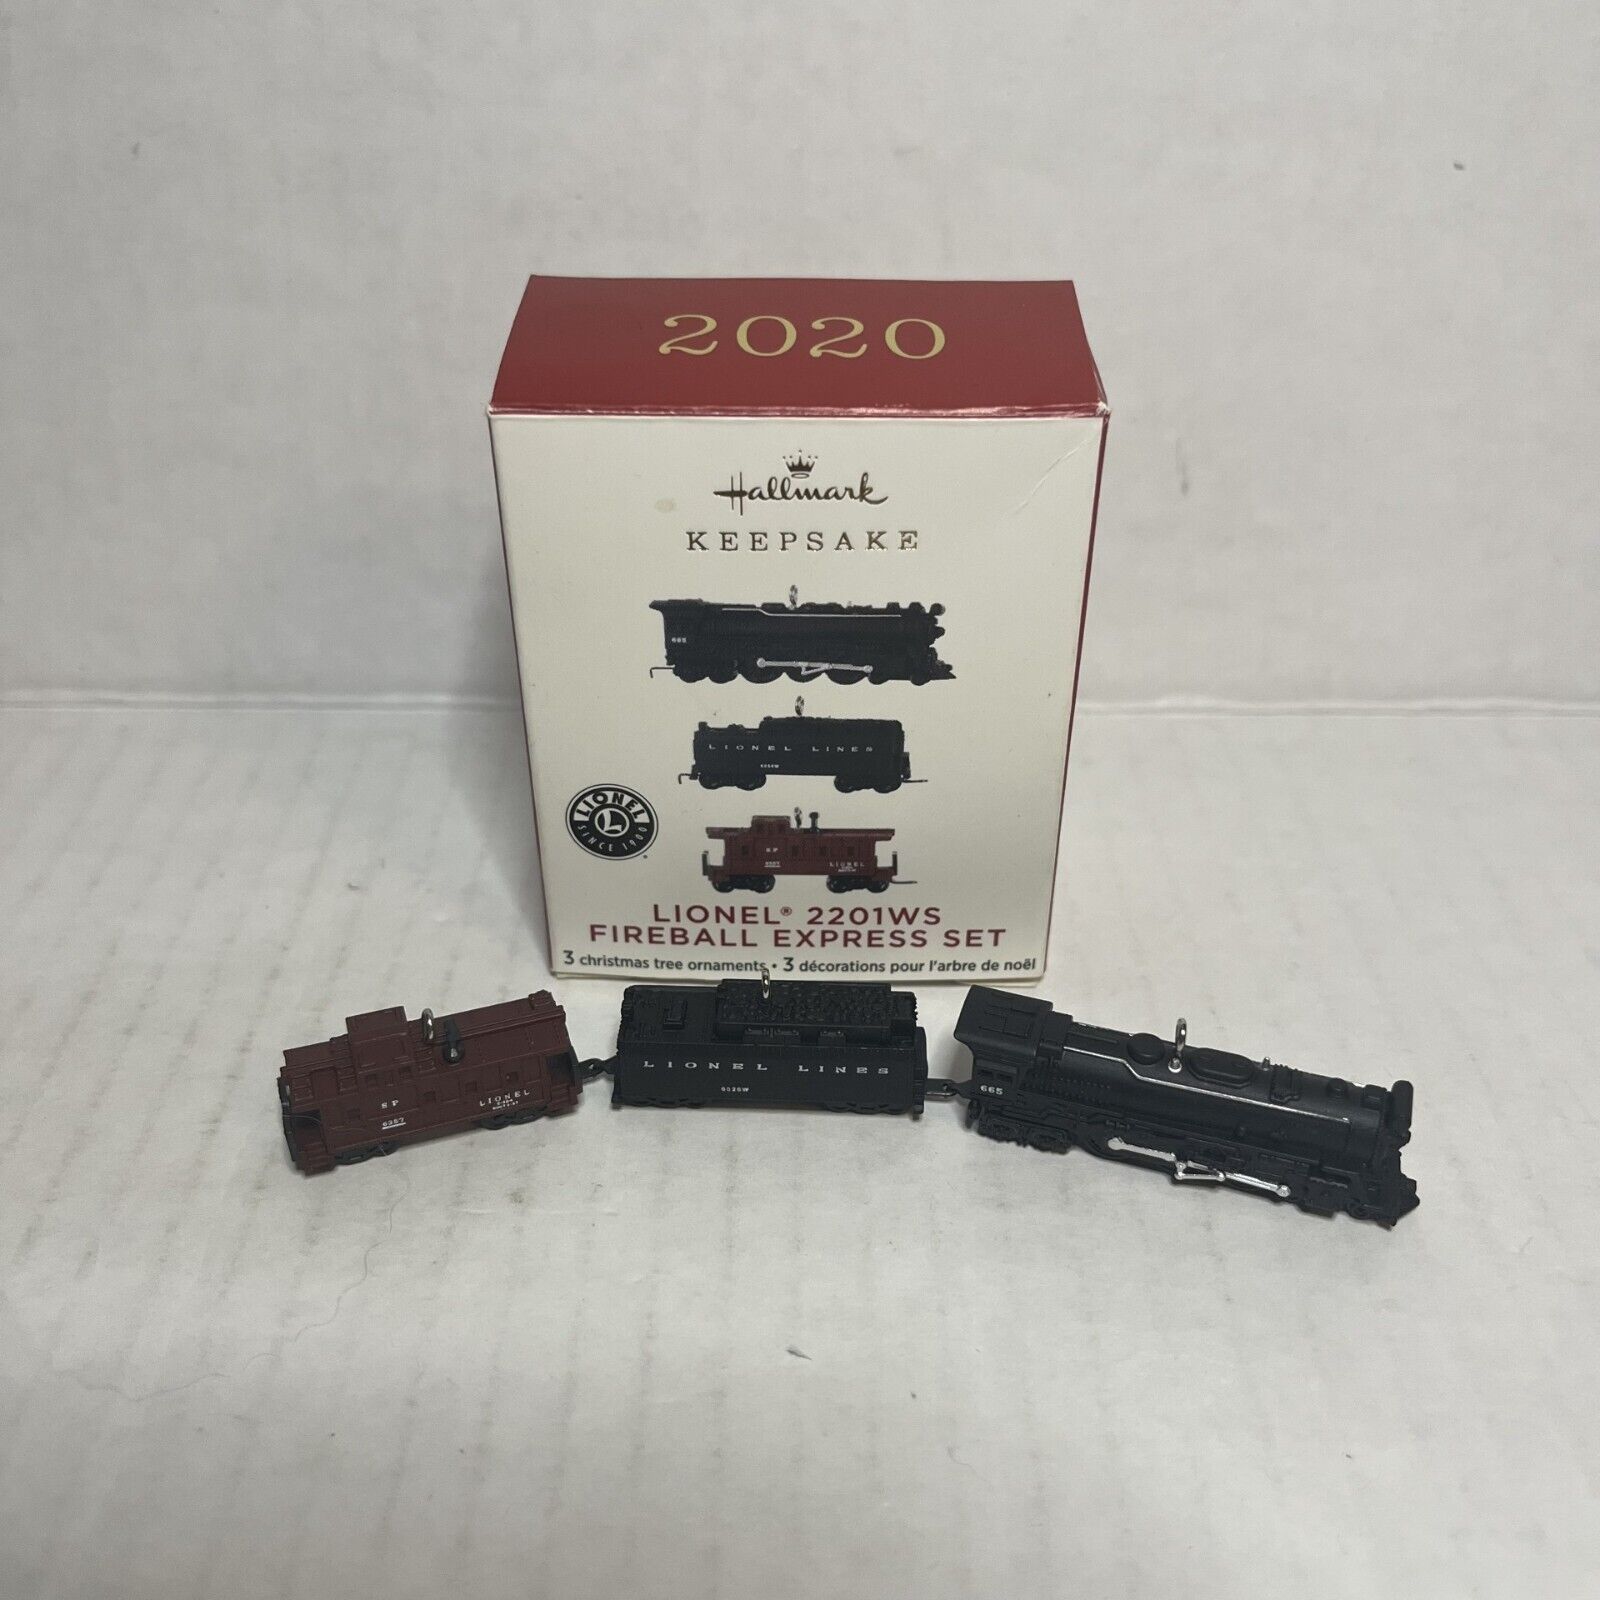 Hallmark Keepsake 2020 LIONEL 2201WS Fireball Express Miniature Train Ornaments